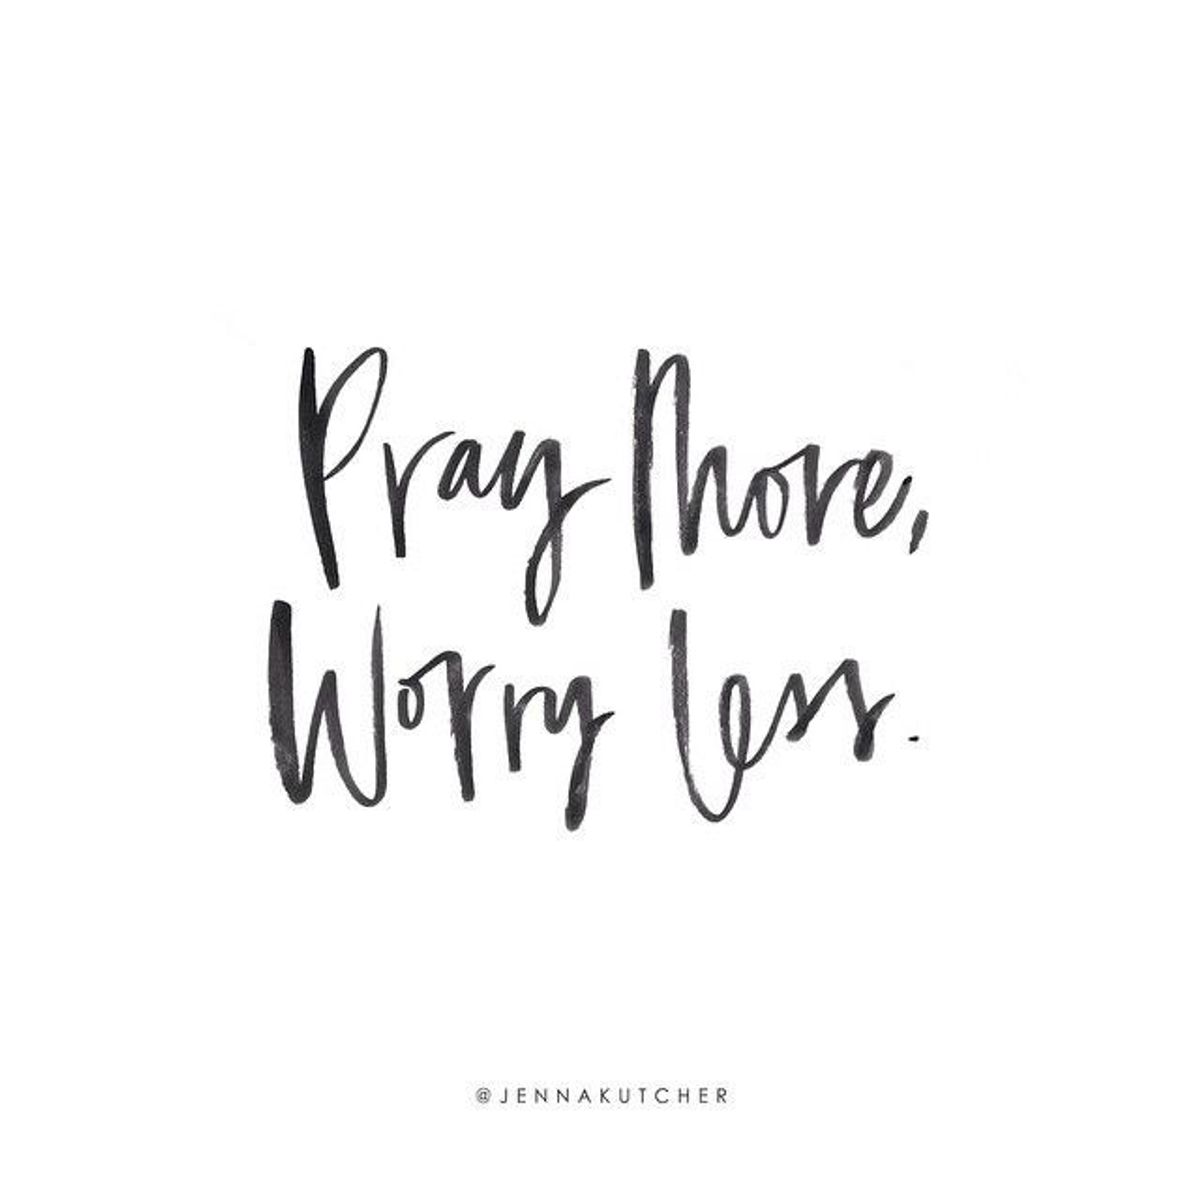 Pray More, Worry Less